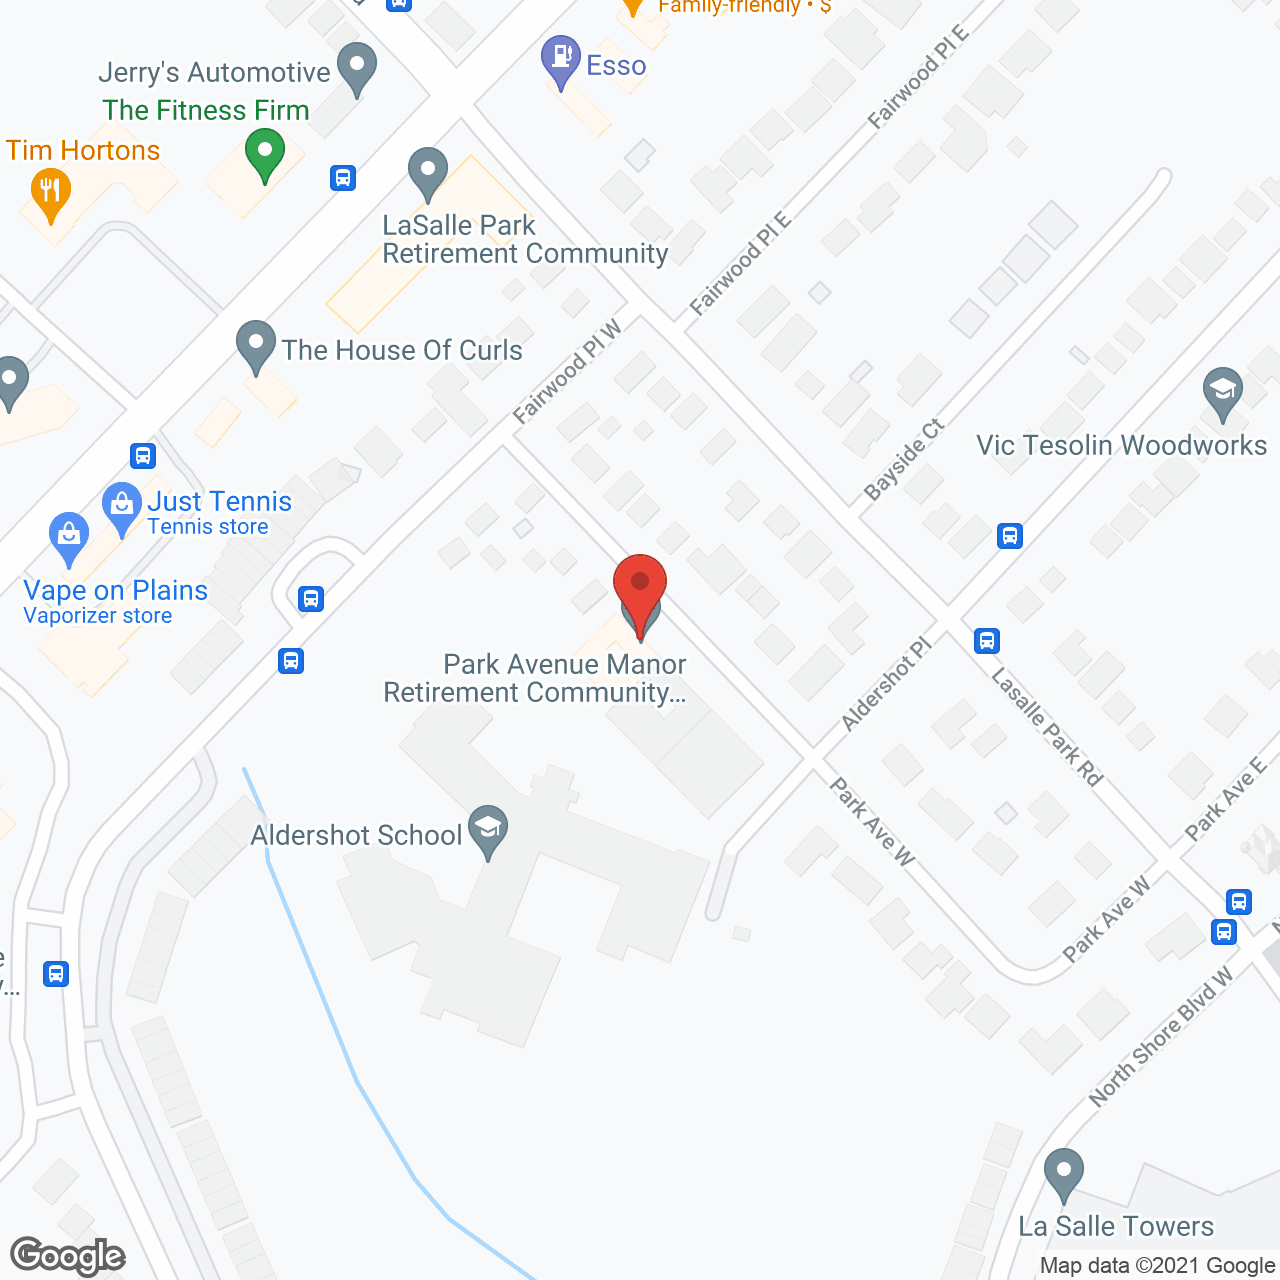 Park Avenue Manor in google map